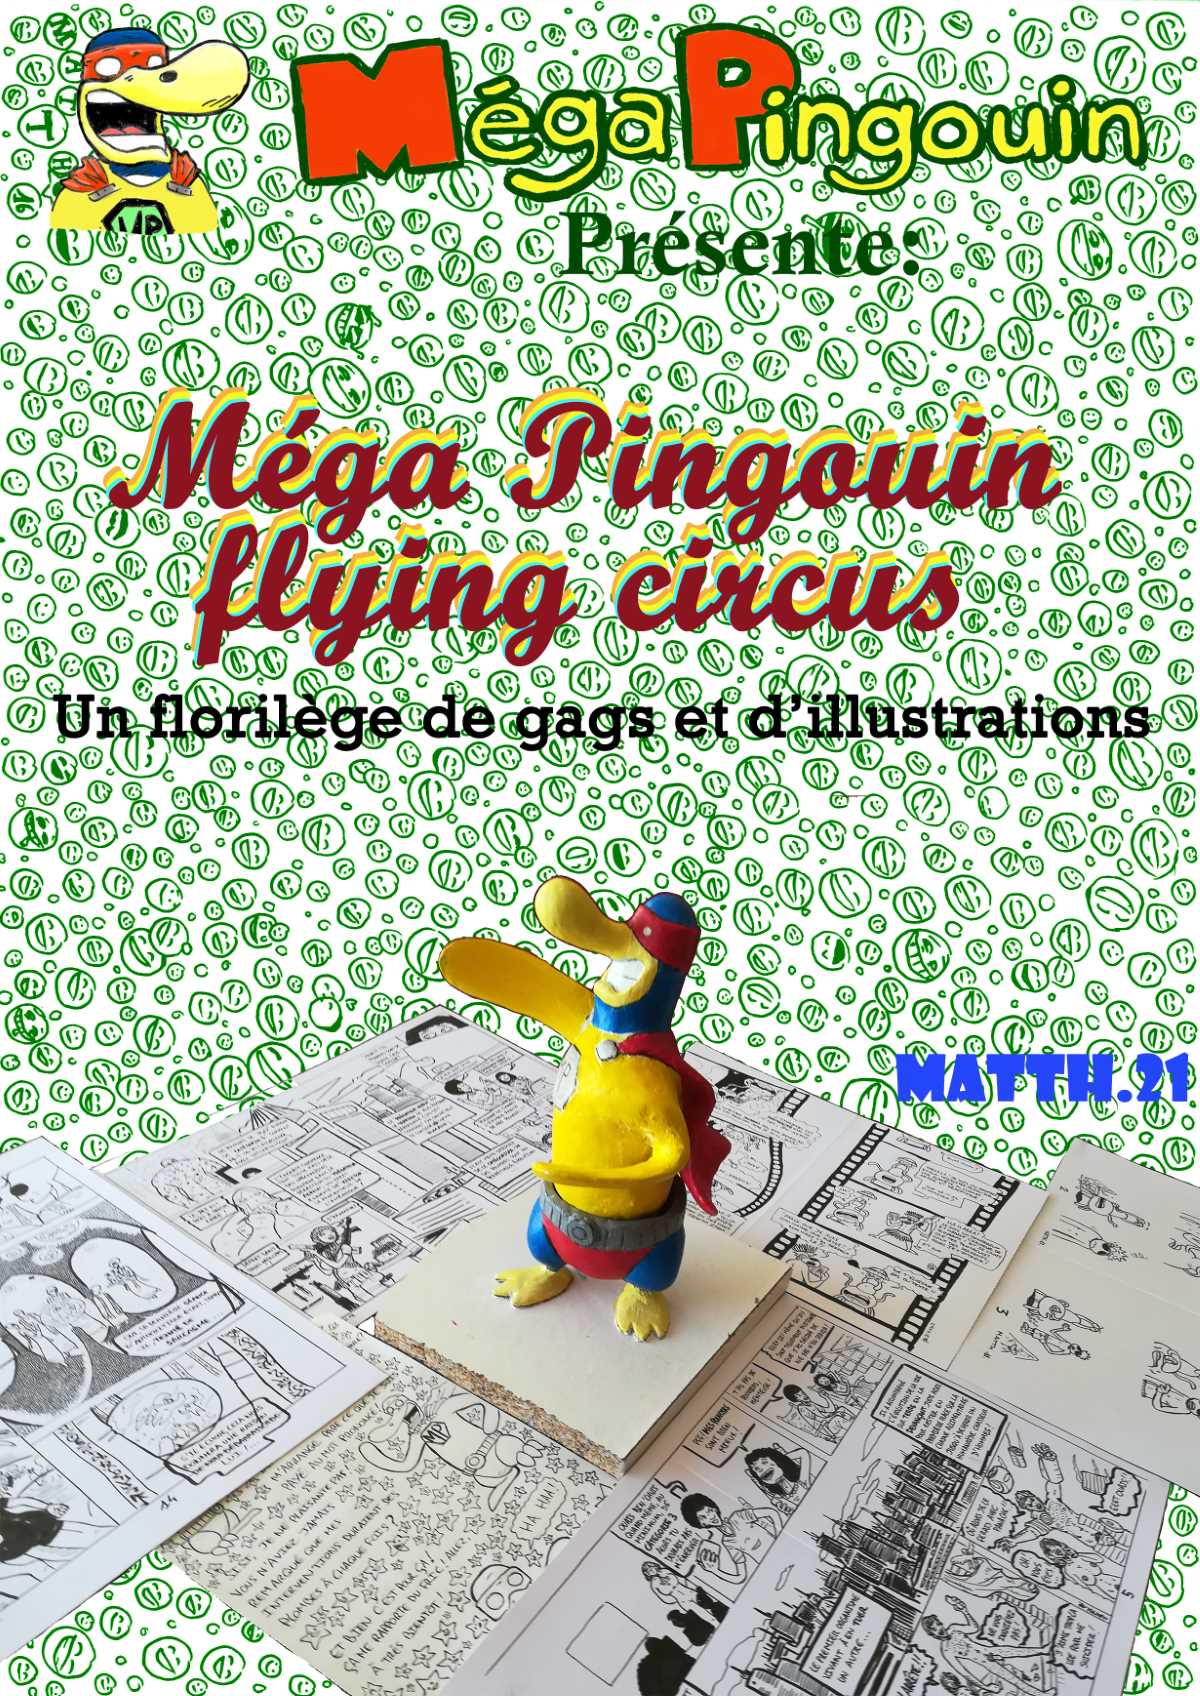 megapingouin-present-illustration-flying-circus